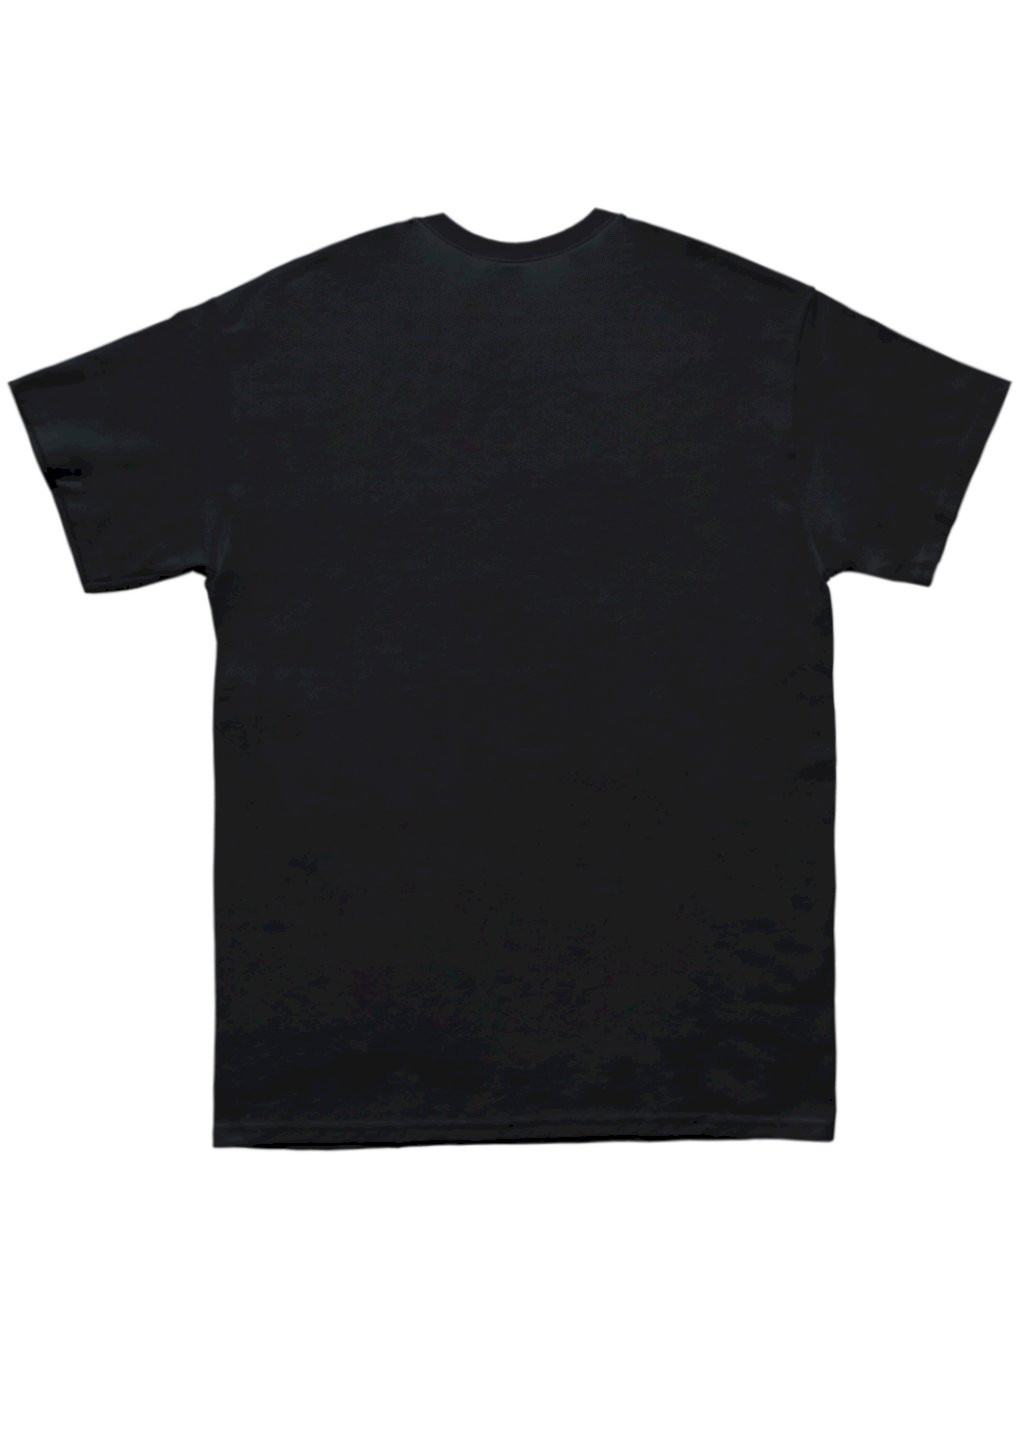 Черная футболка мужская черная "space puzzle " Trace of Space